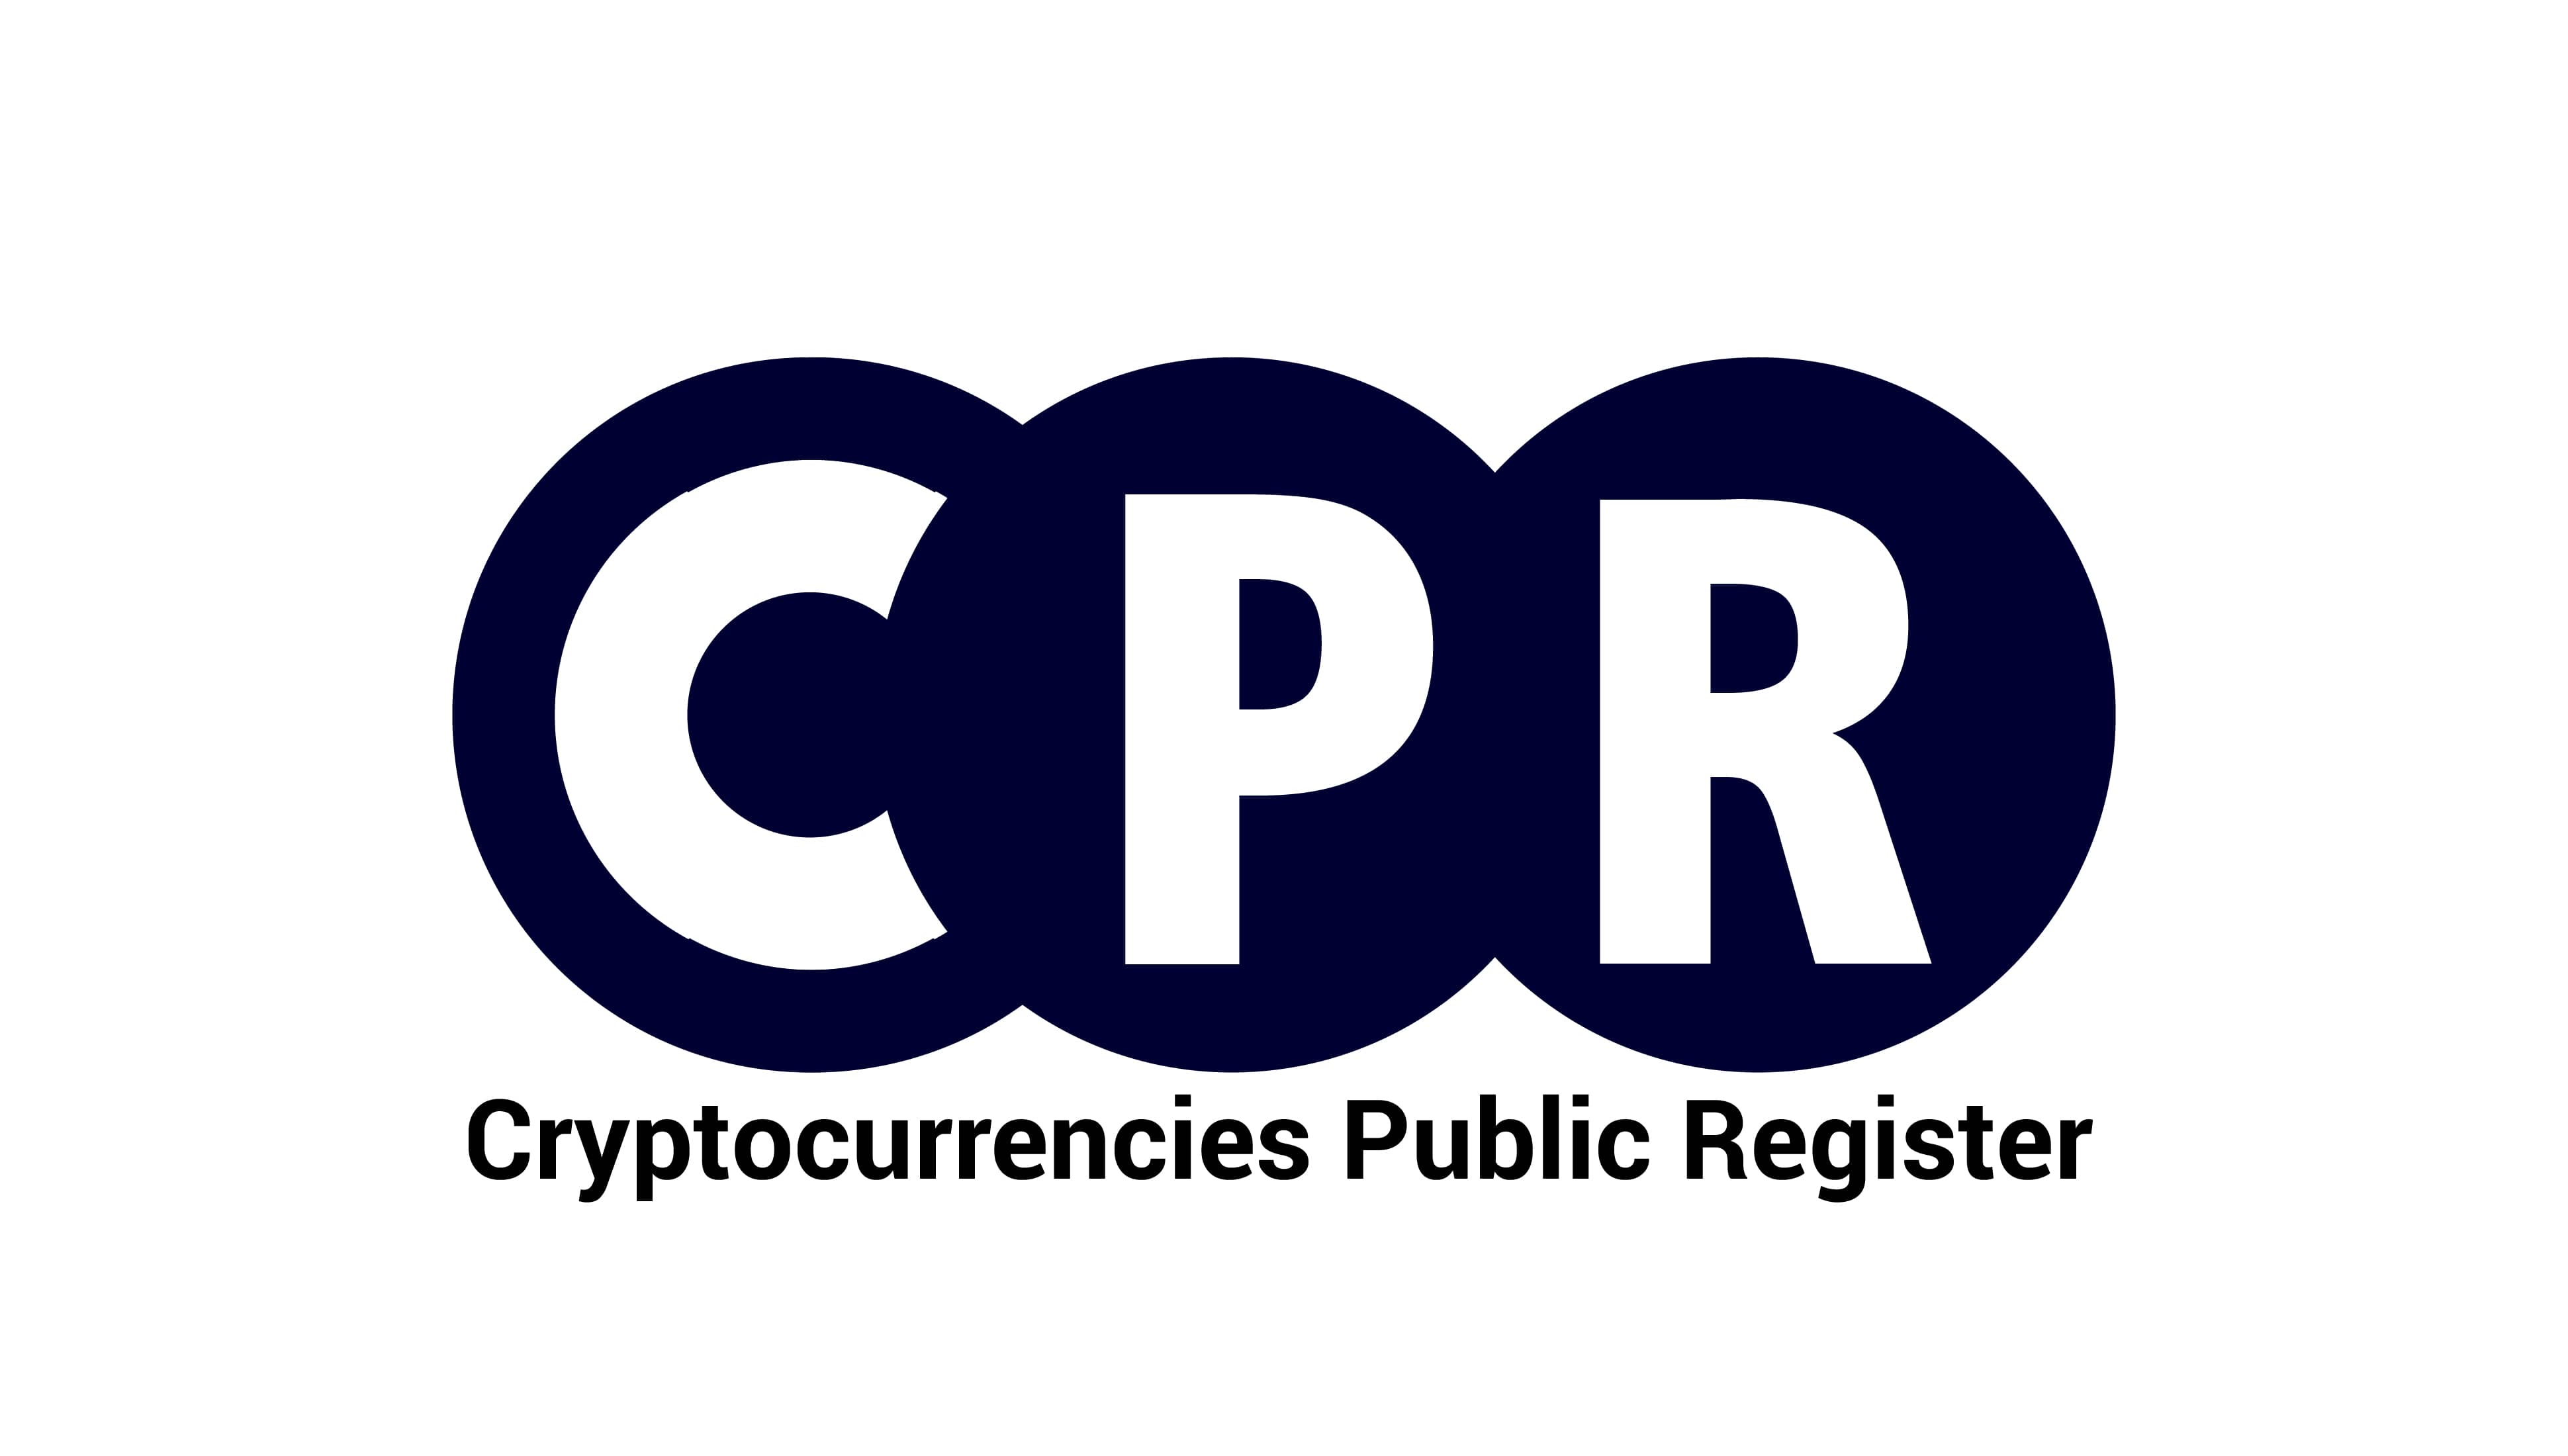 Public Registry for Cryptocurrencies